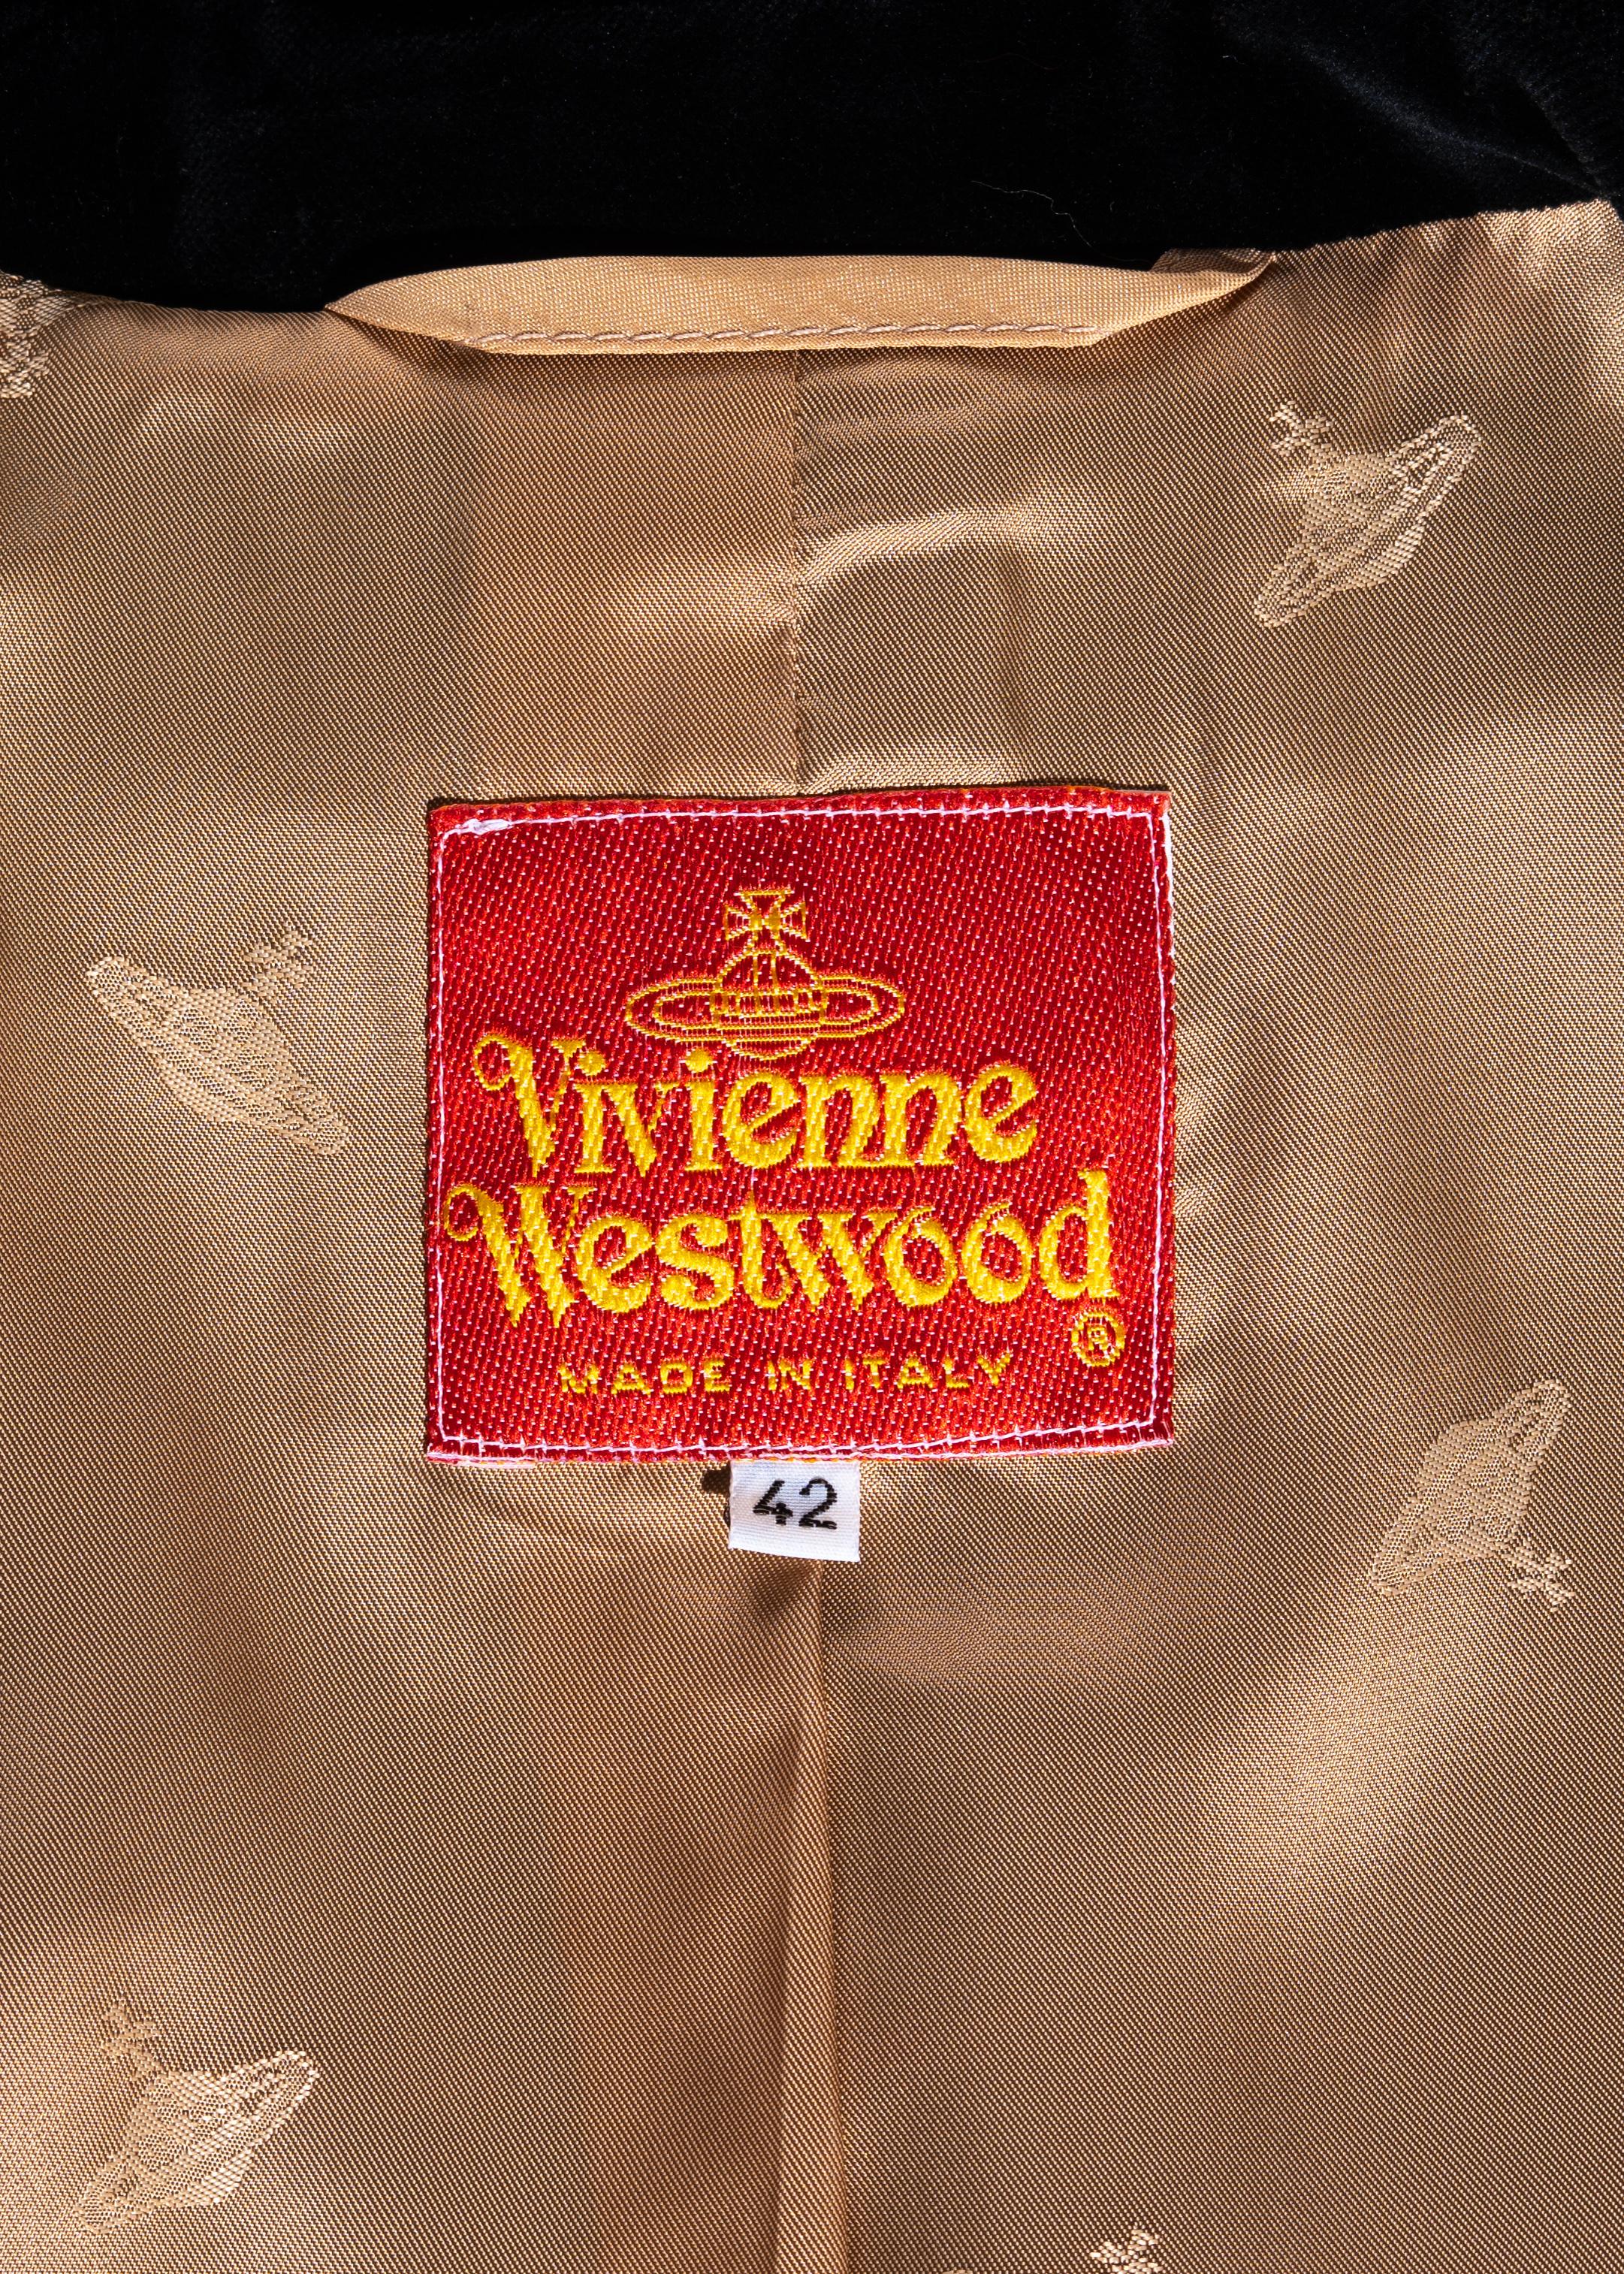 Vivienne Westwood tartan wool blazer jacket and mini skirt set, fw 1993 1